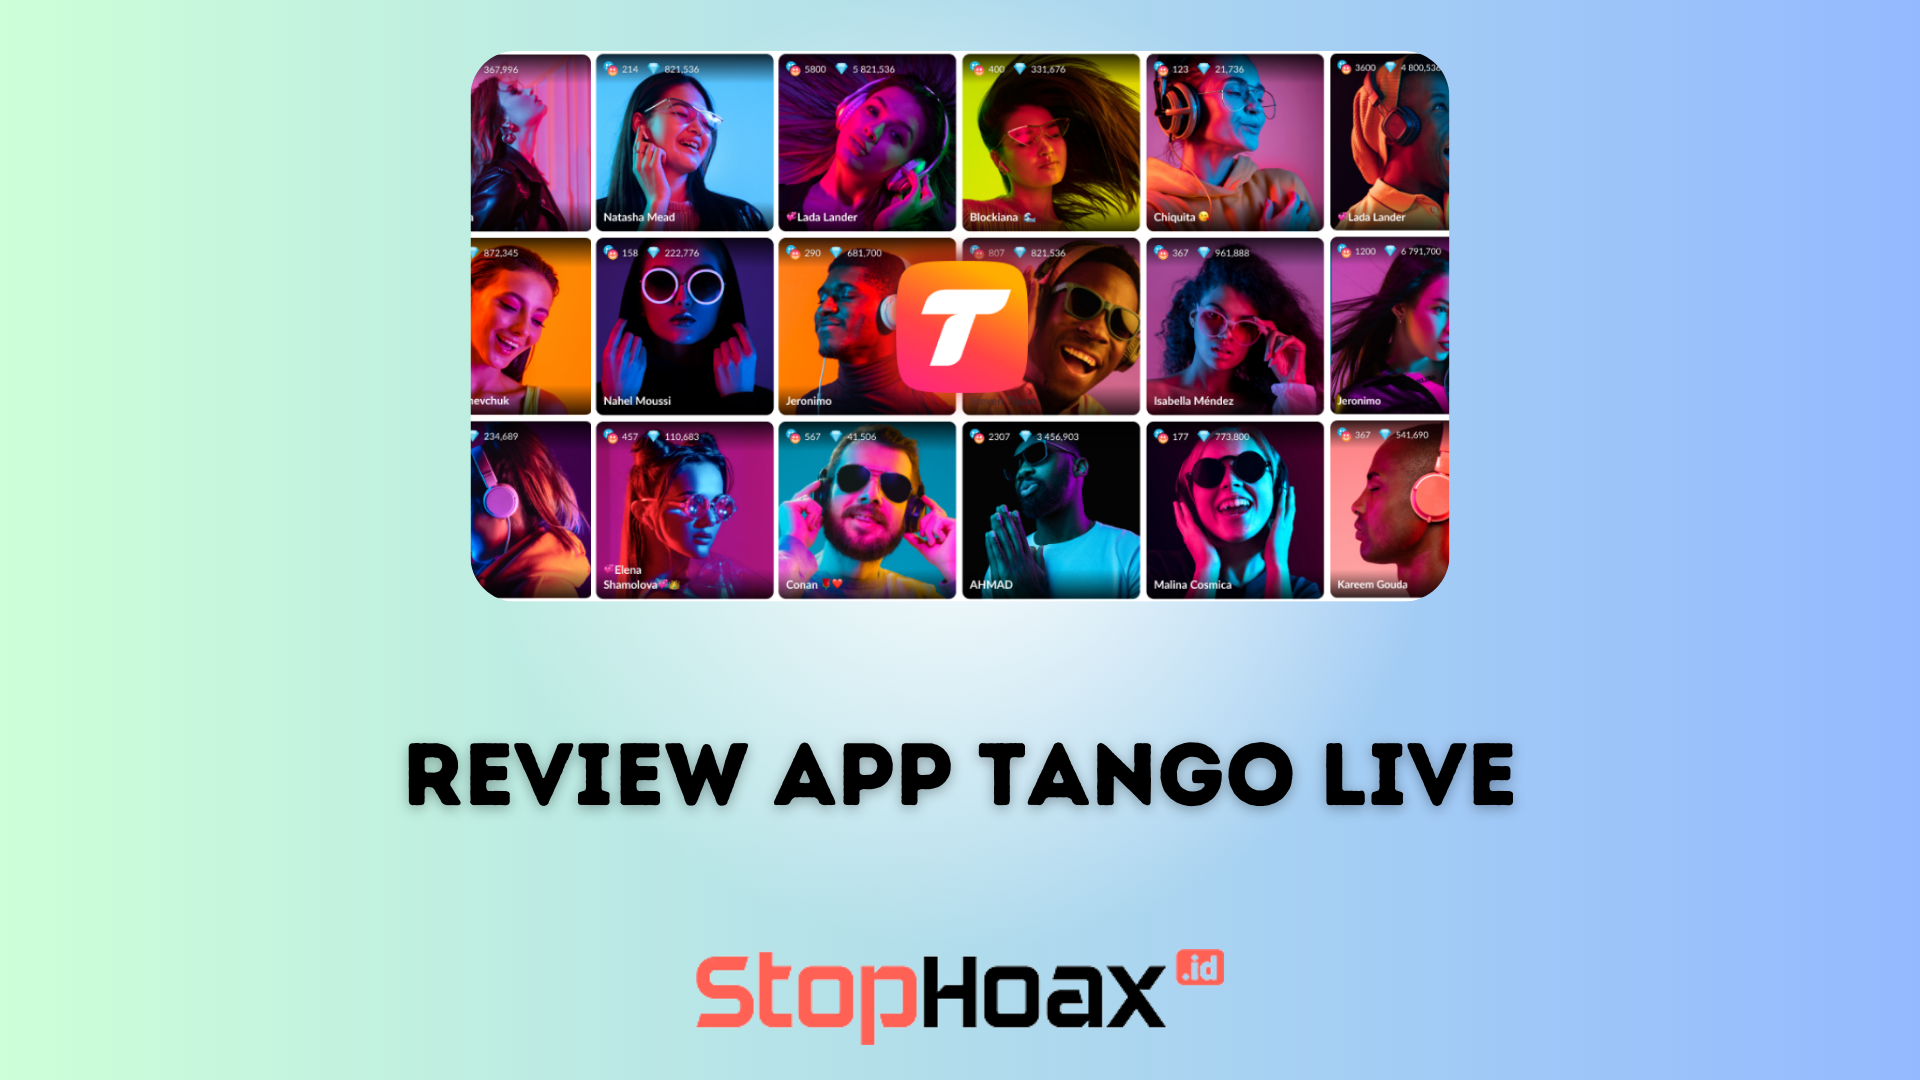 Review App Tango Live